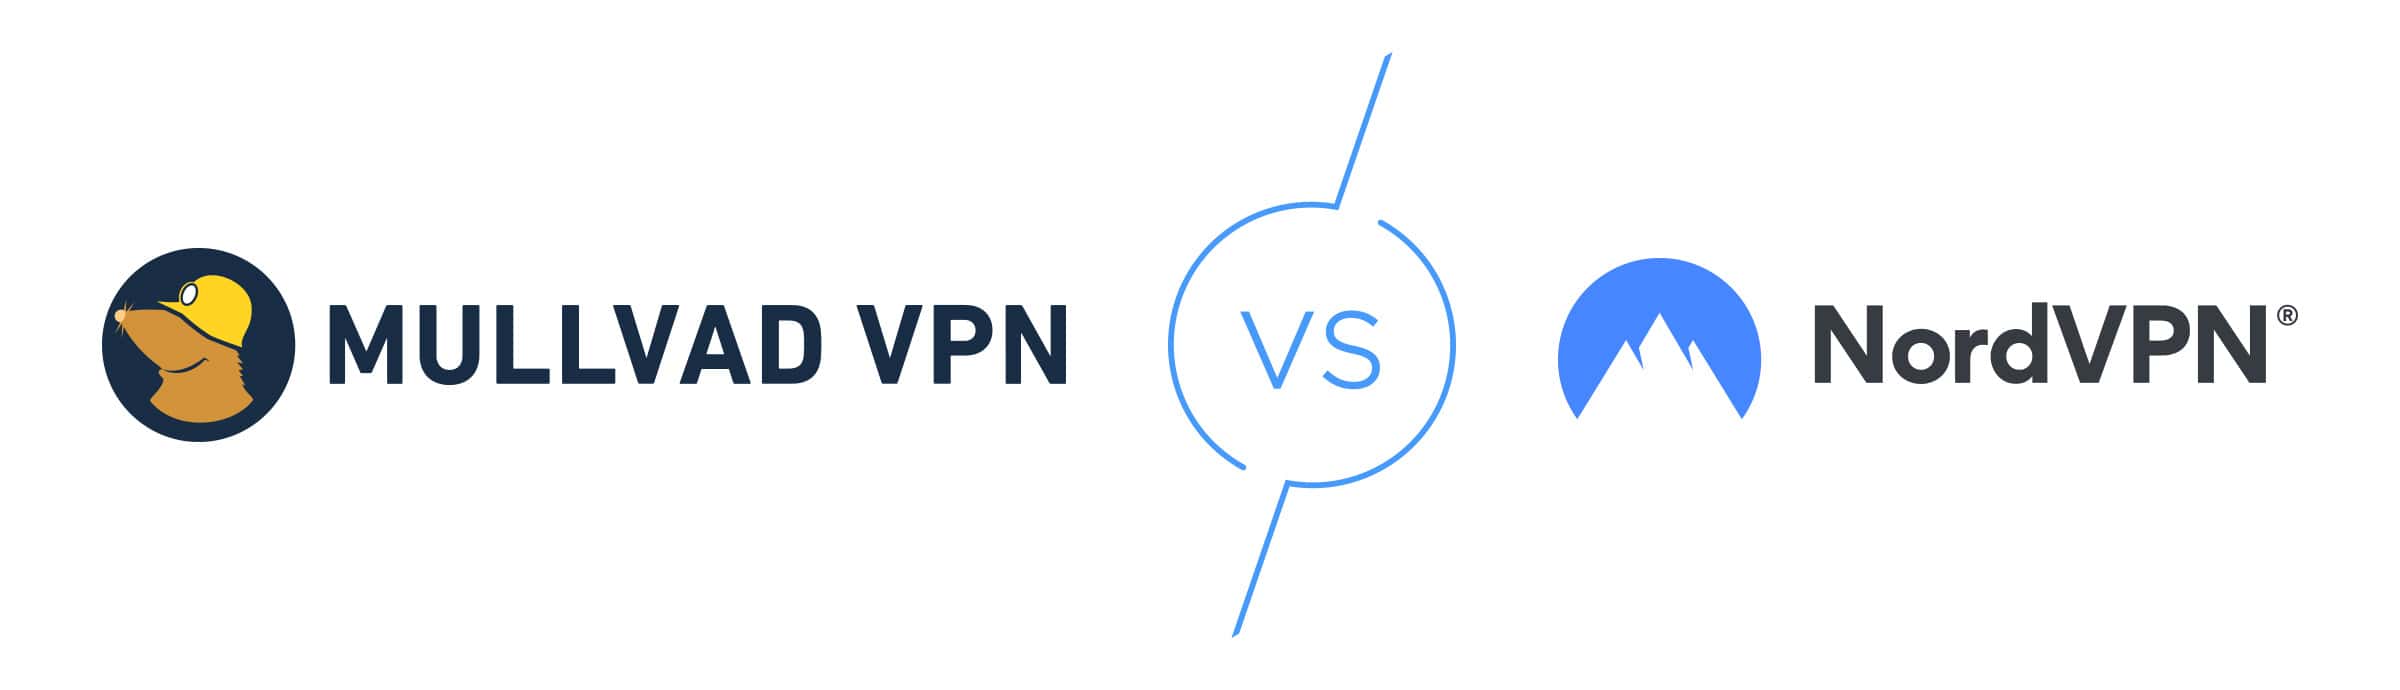 Mullvad VPN vs NordVPN